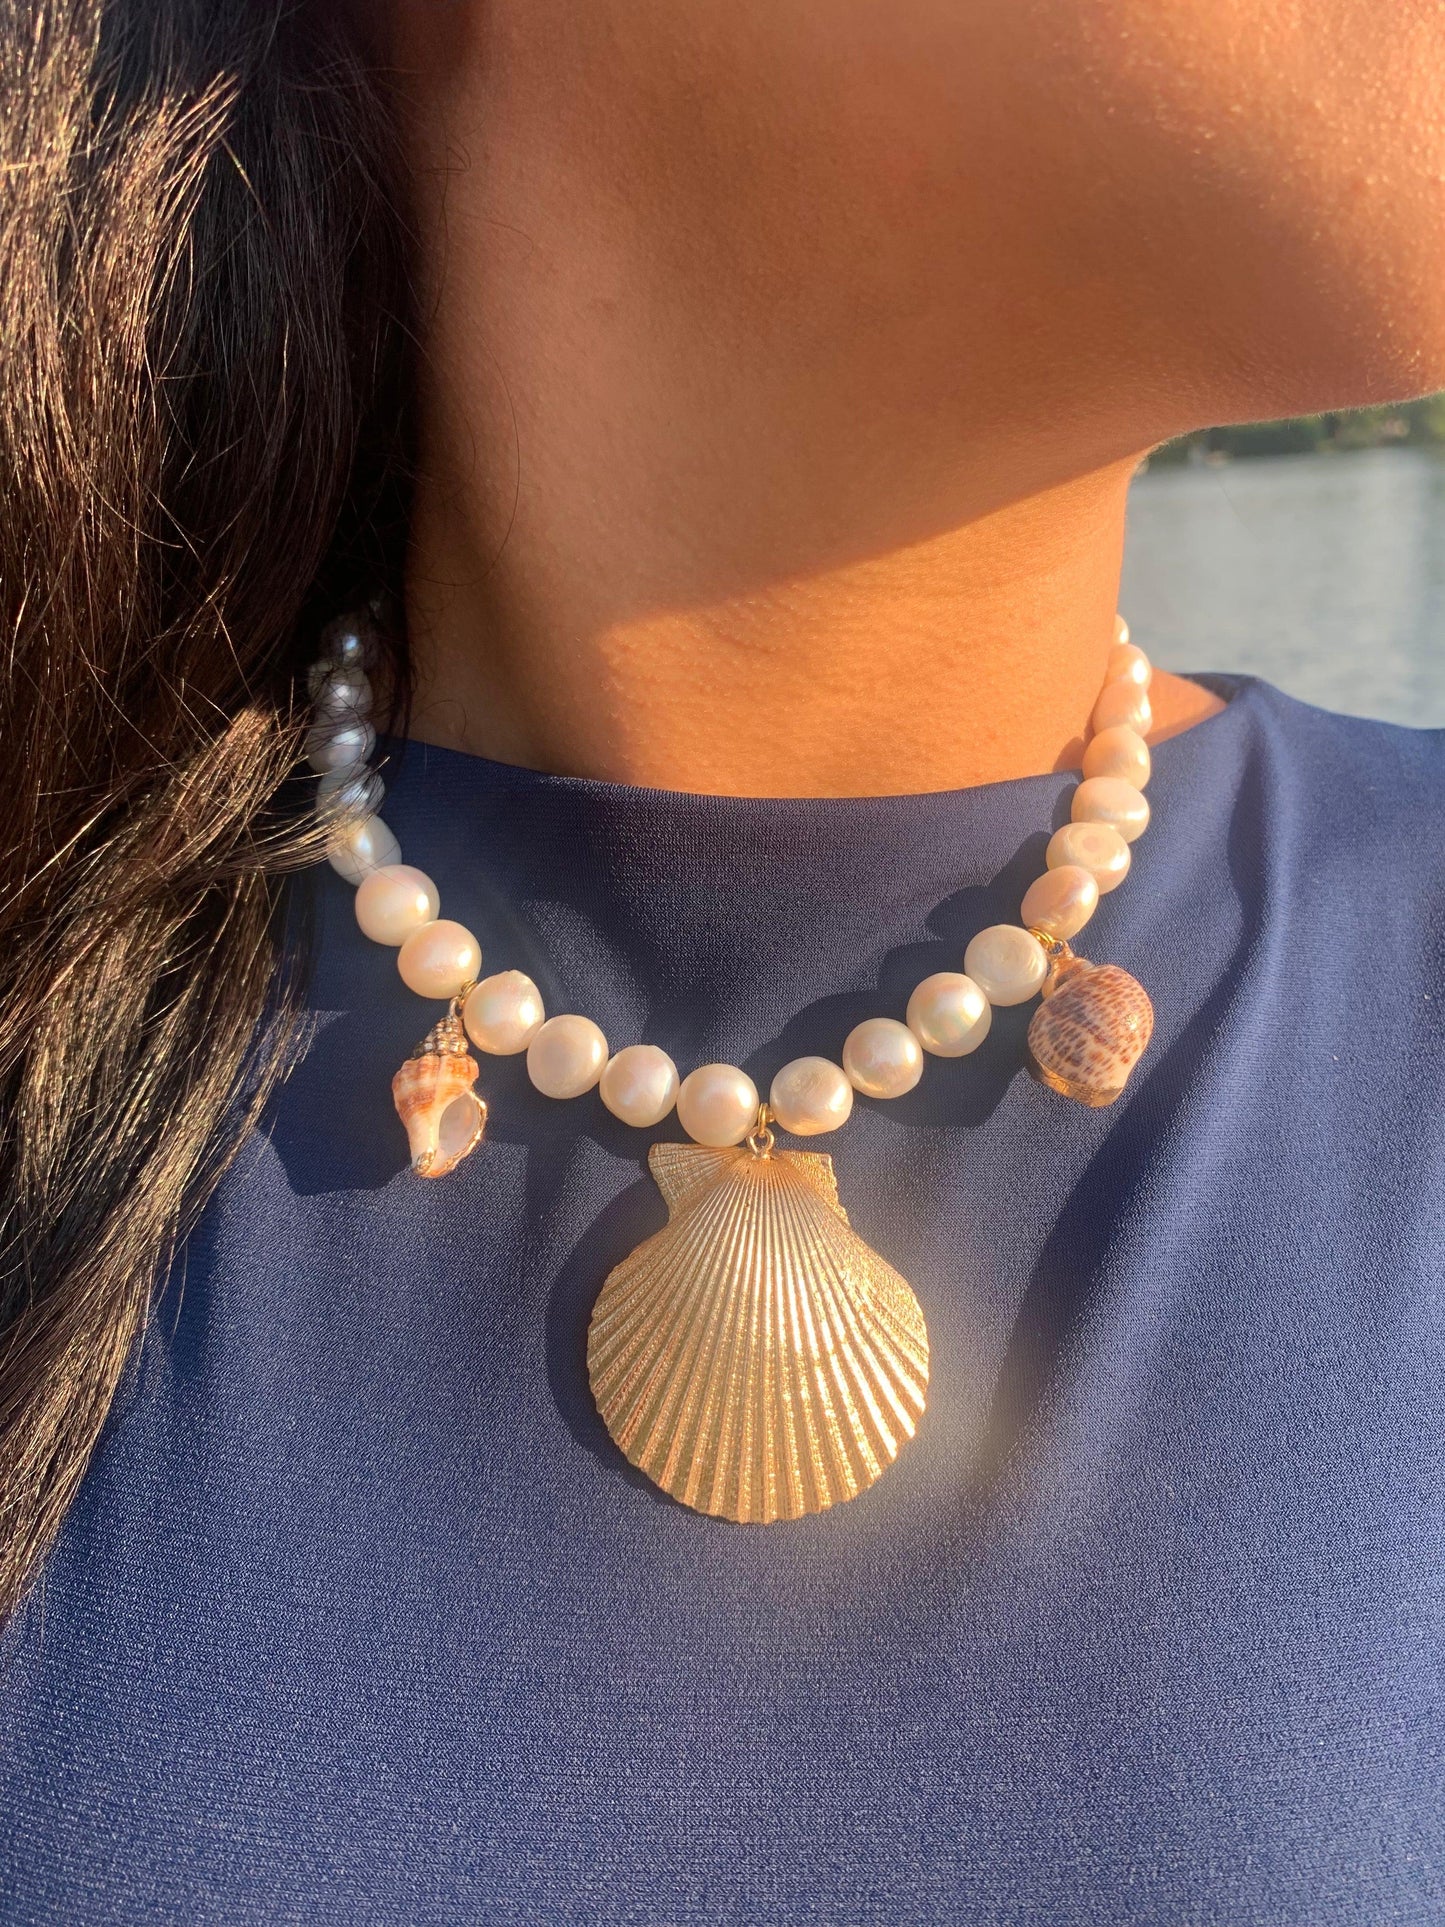 Shell_neckace_golden_pearls